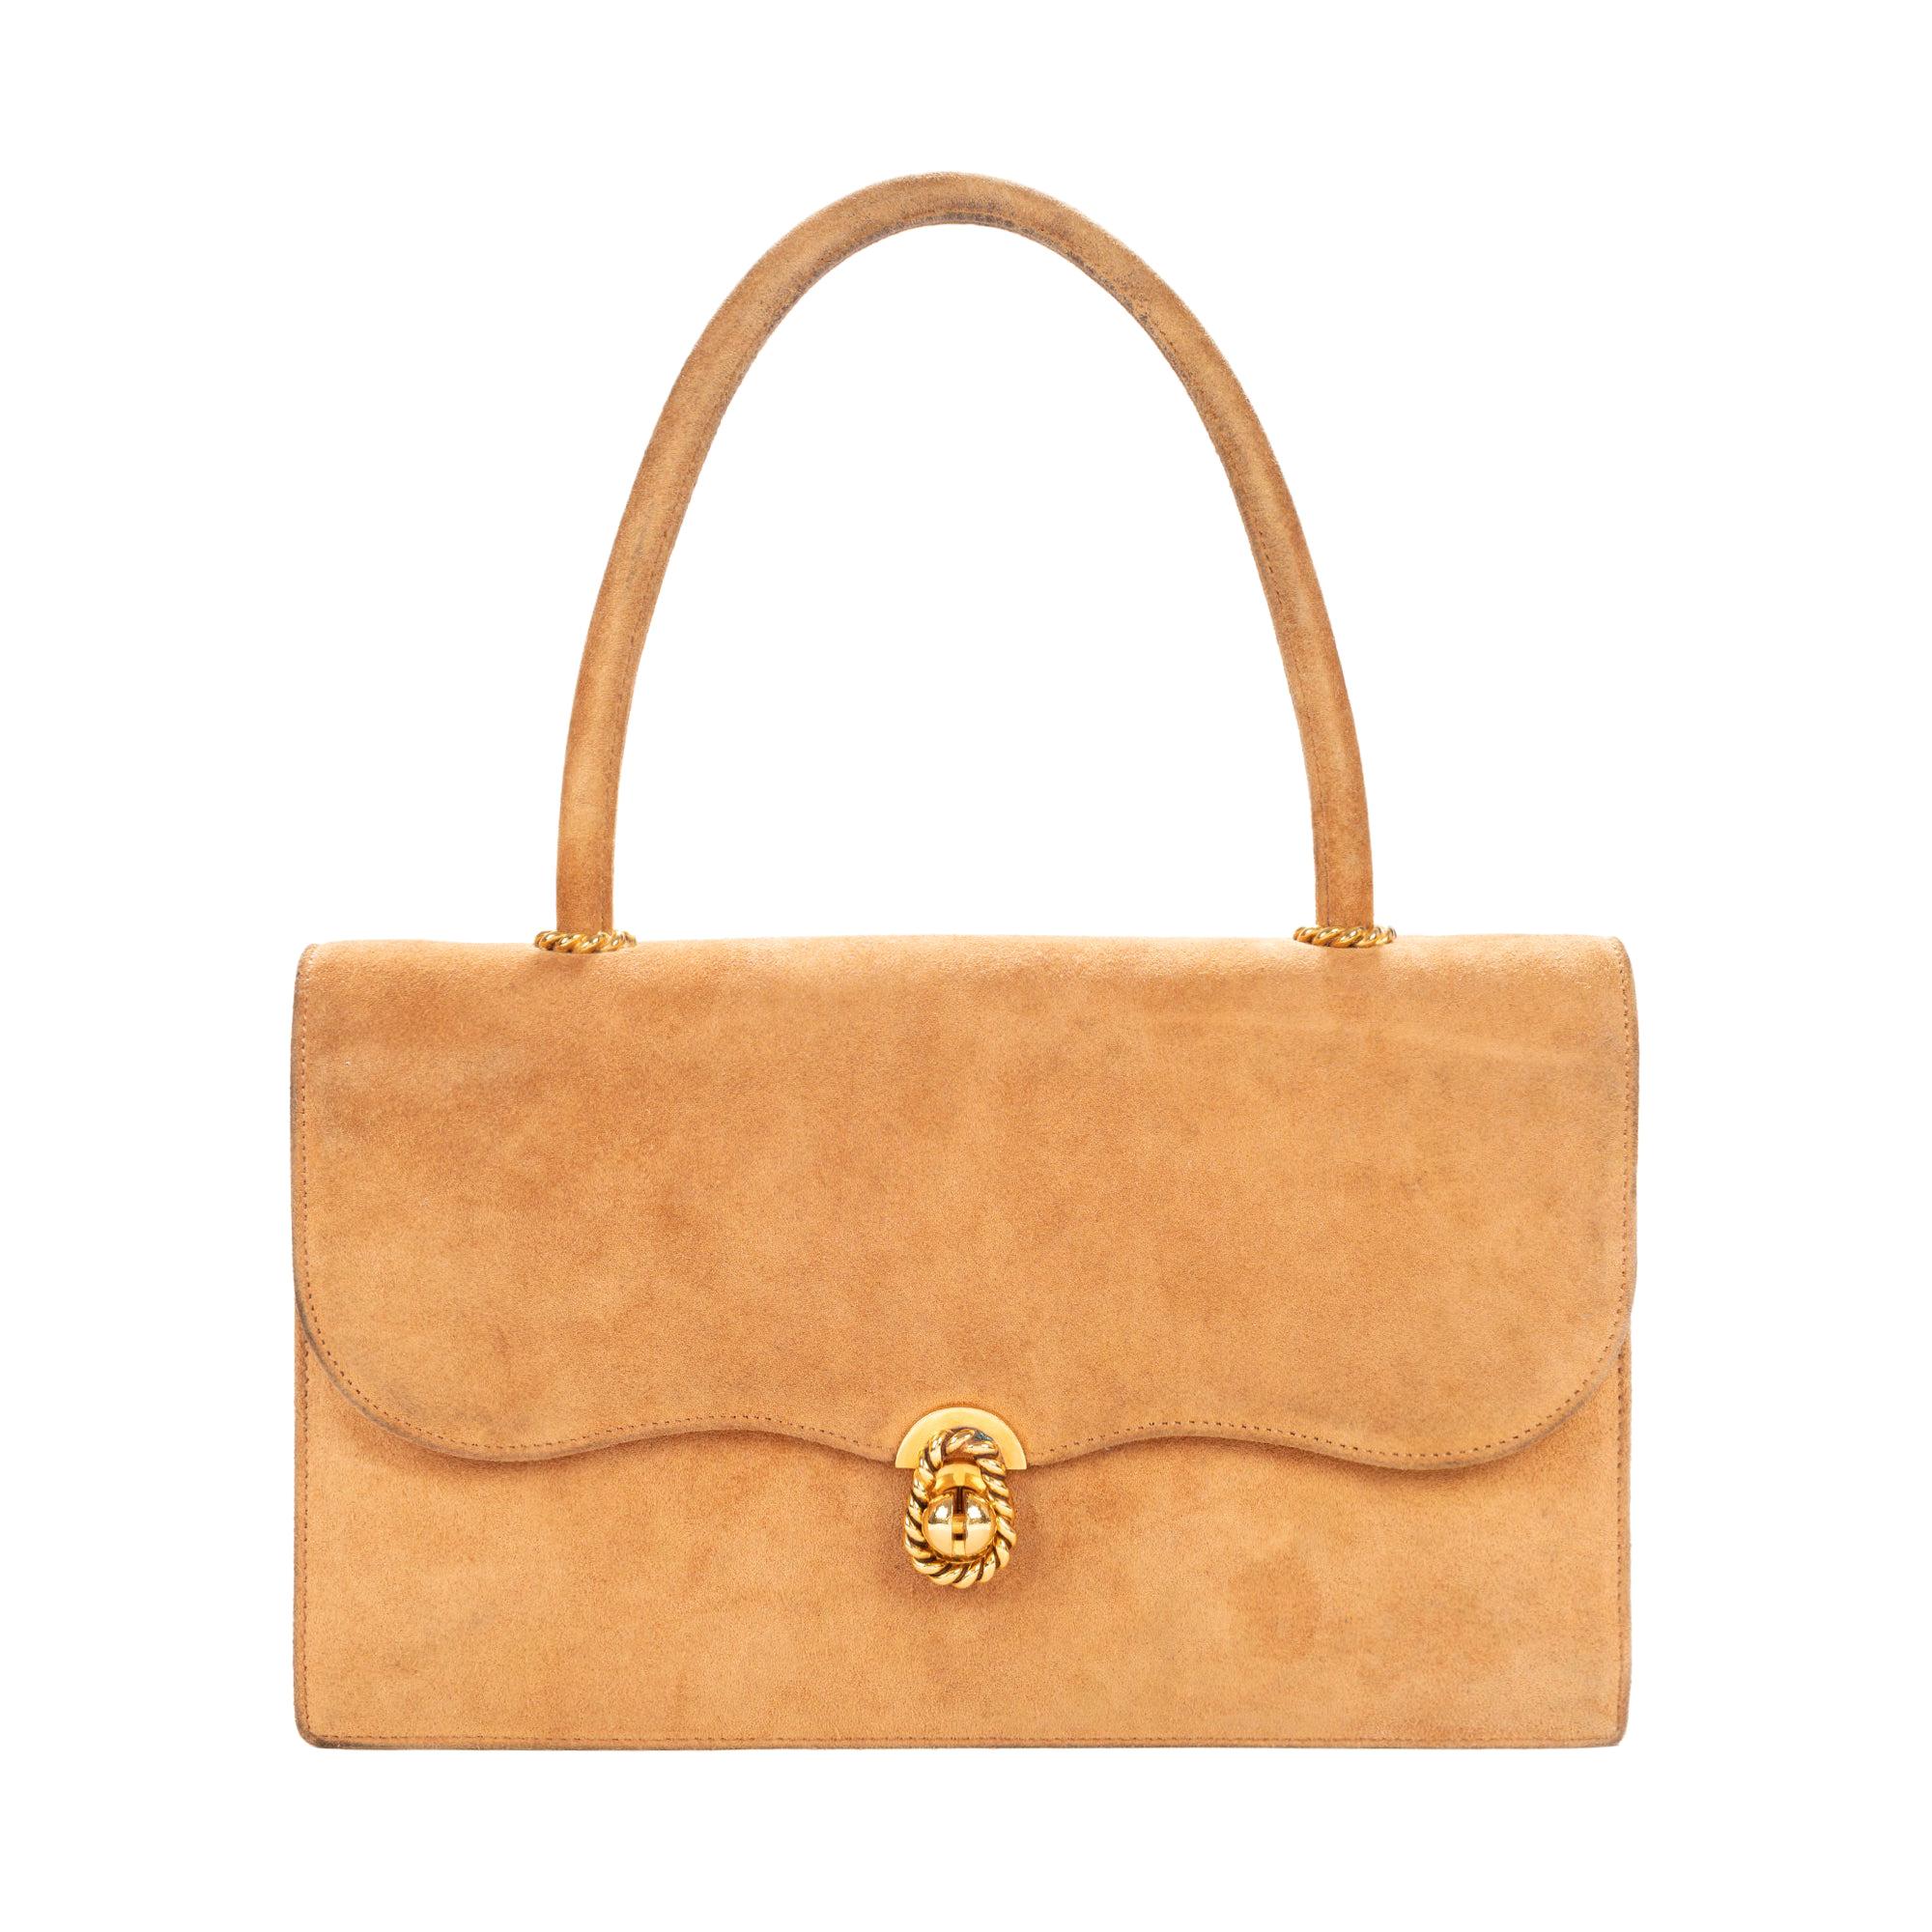 Hermès "Escale" vintage handbag in beige suede with gold hardware